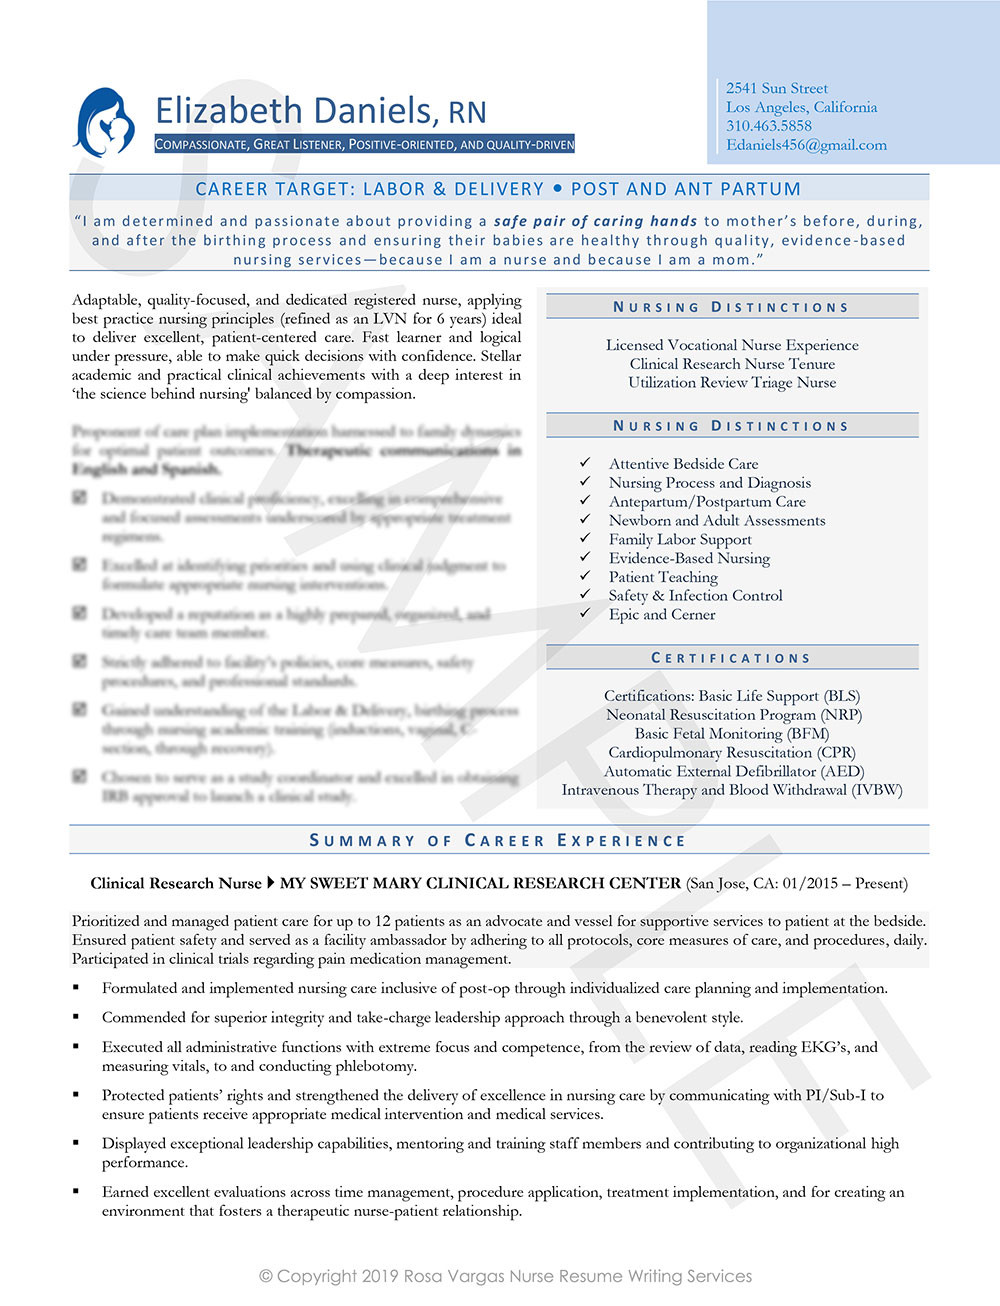 Sample Resume with Com Tia Credentials Nursing Resume Template